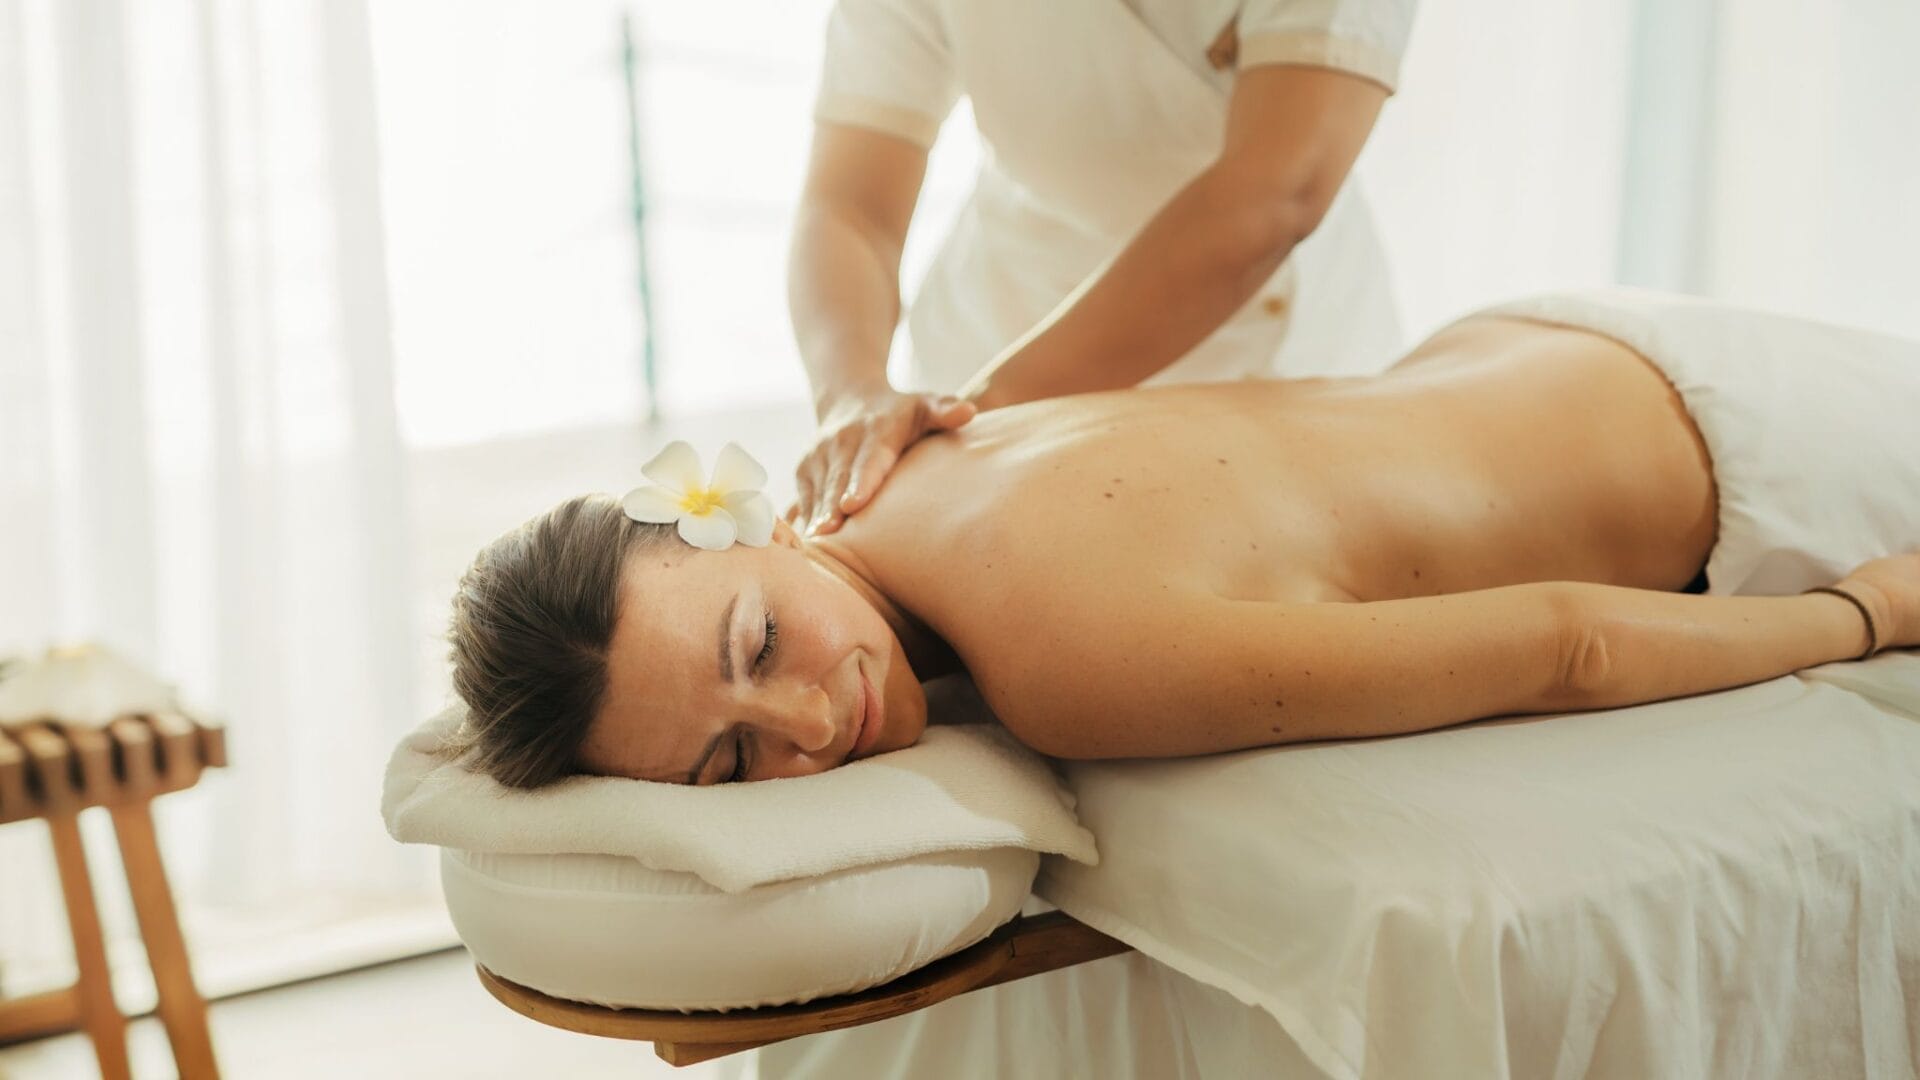 A woman getting a massage